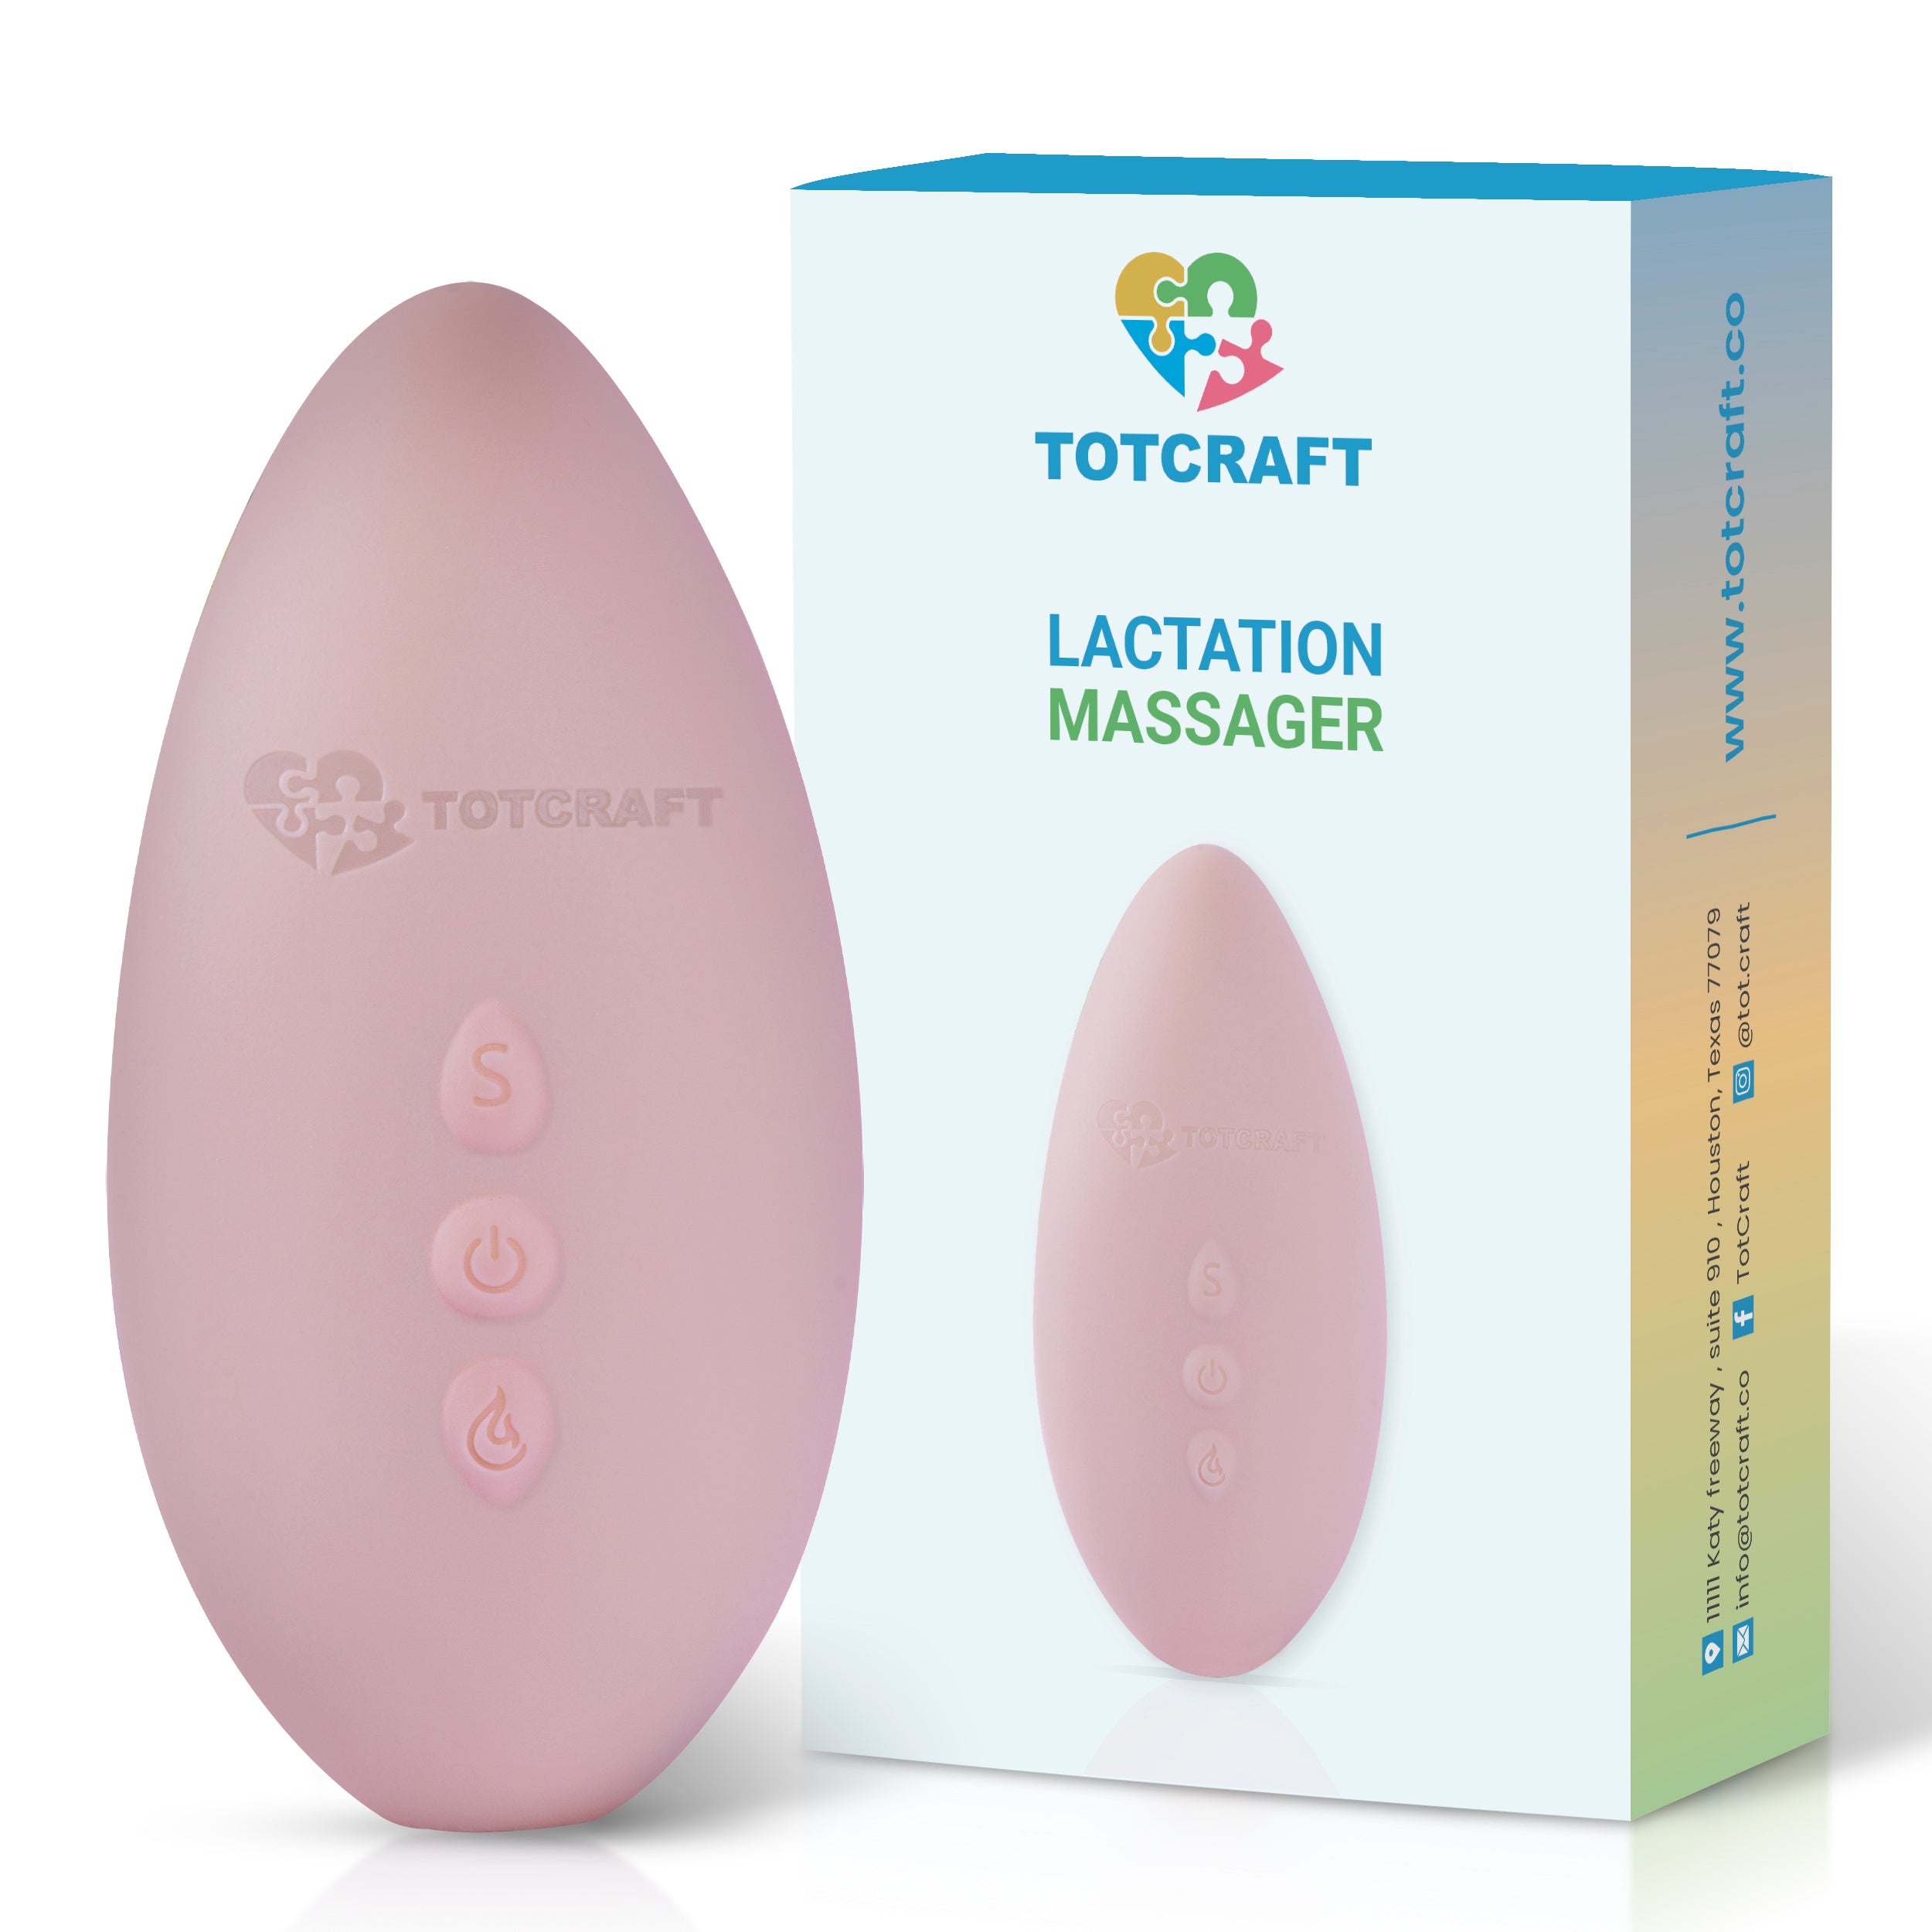 Lactation massager – TotCraft